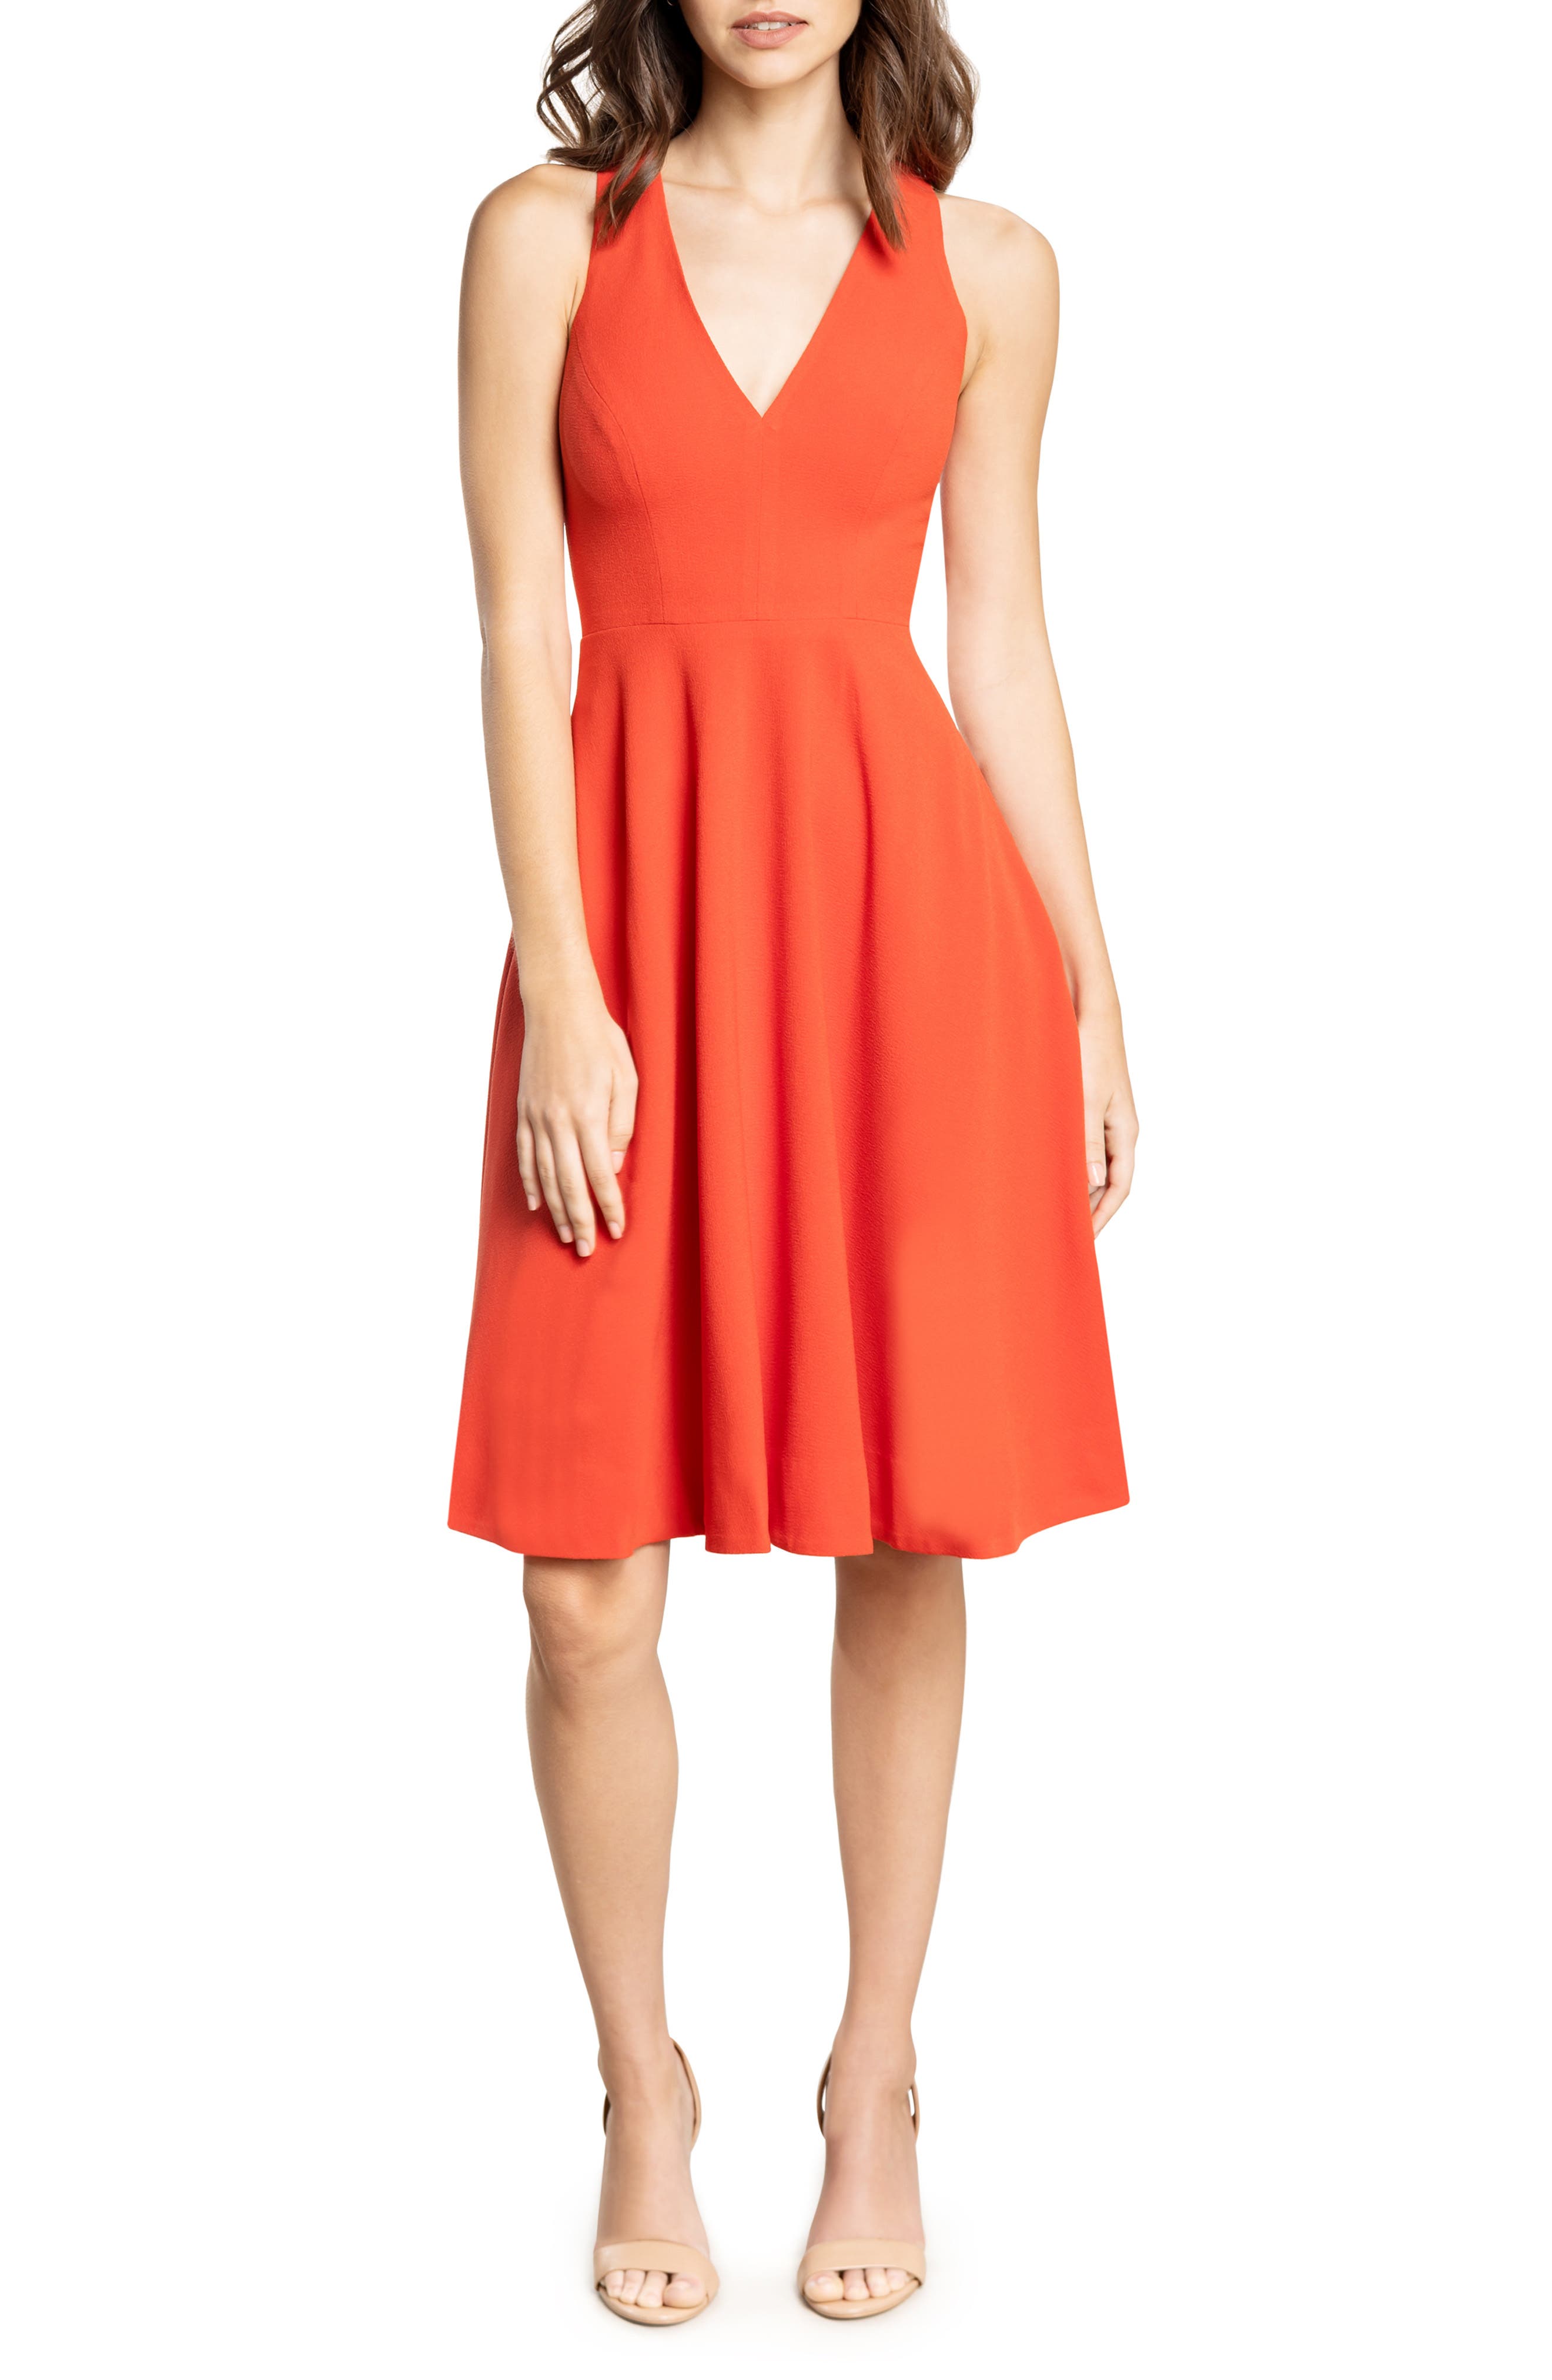 women’s orange dress